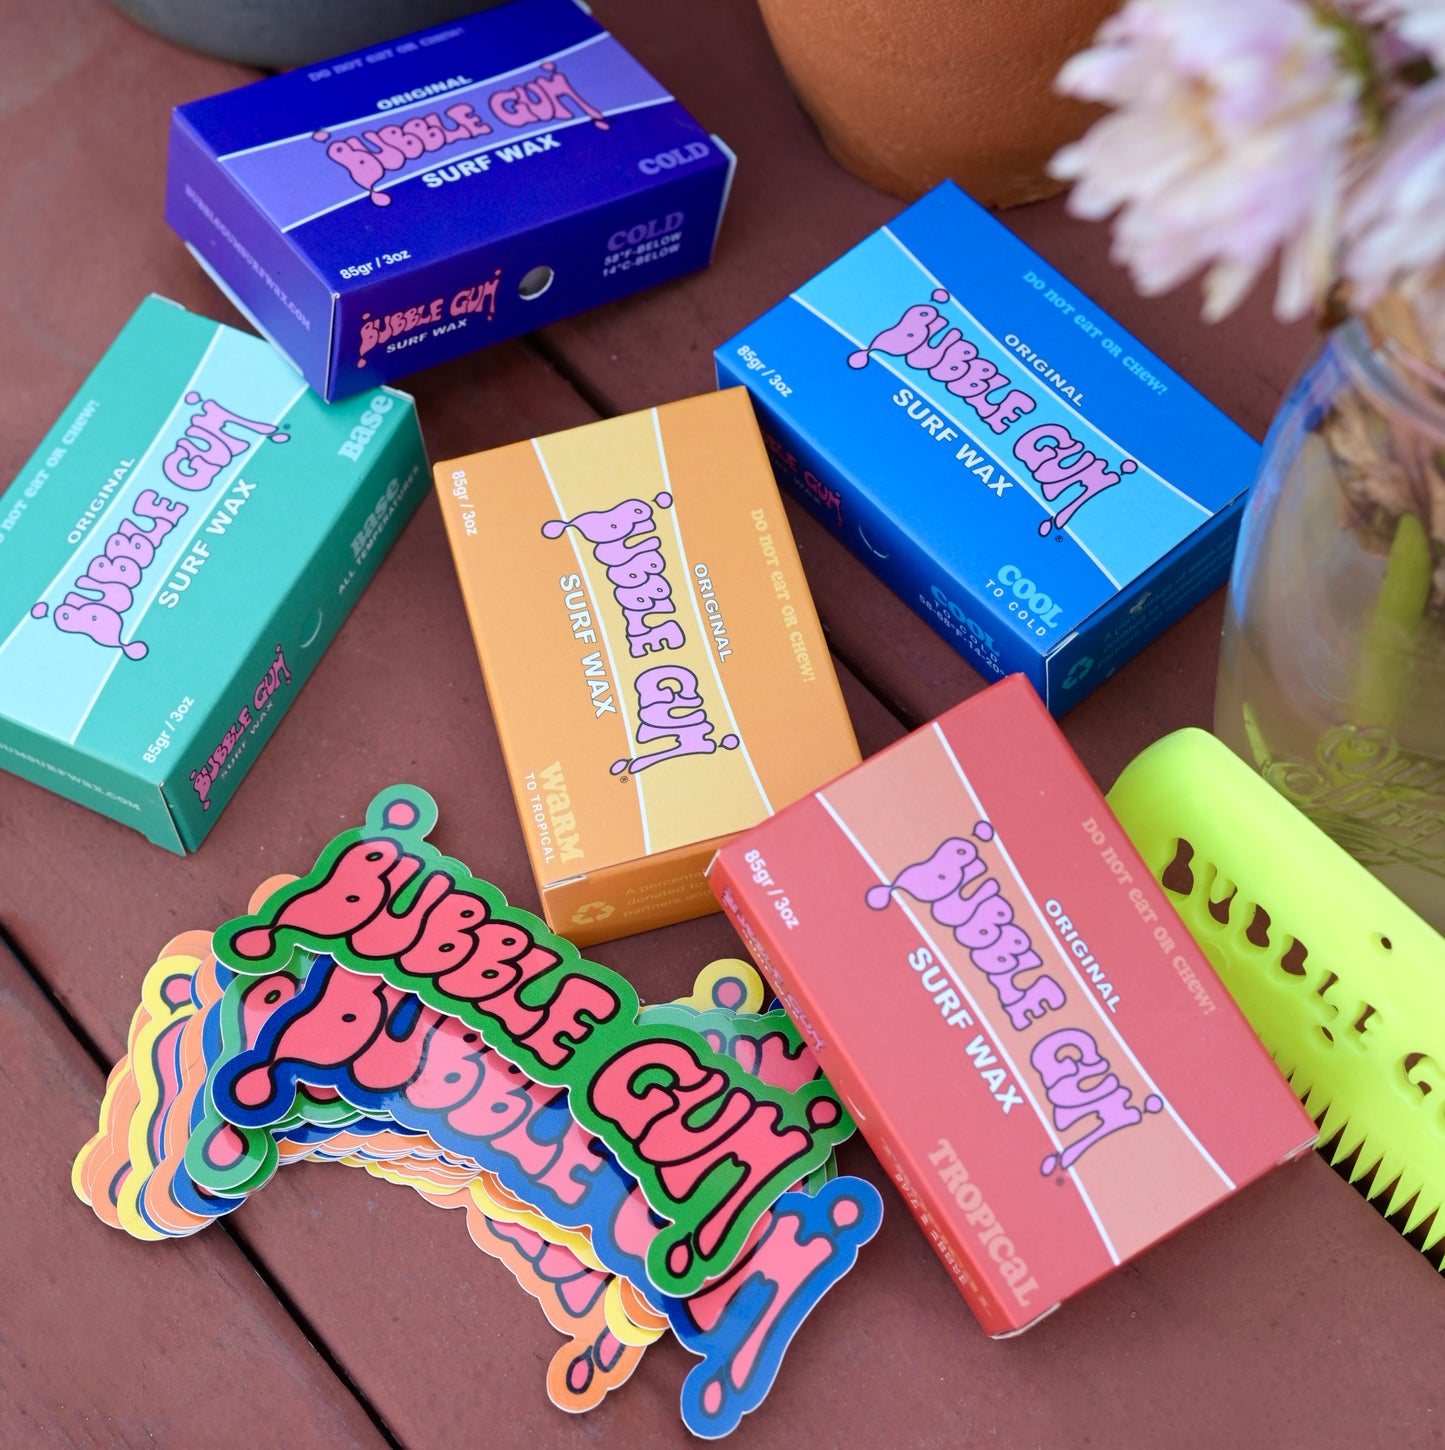 Bubble Gum "Original Formula" Surf Wax Box - Base - All Temps - 6 Pack